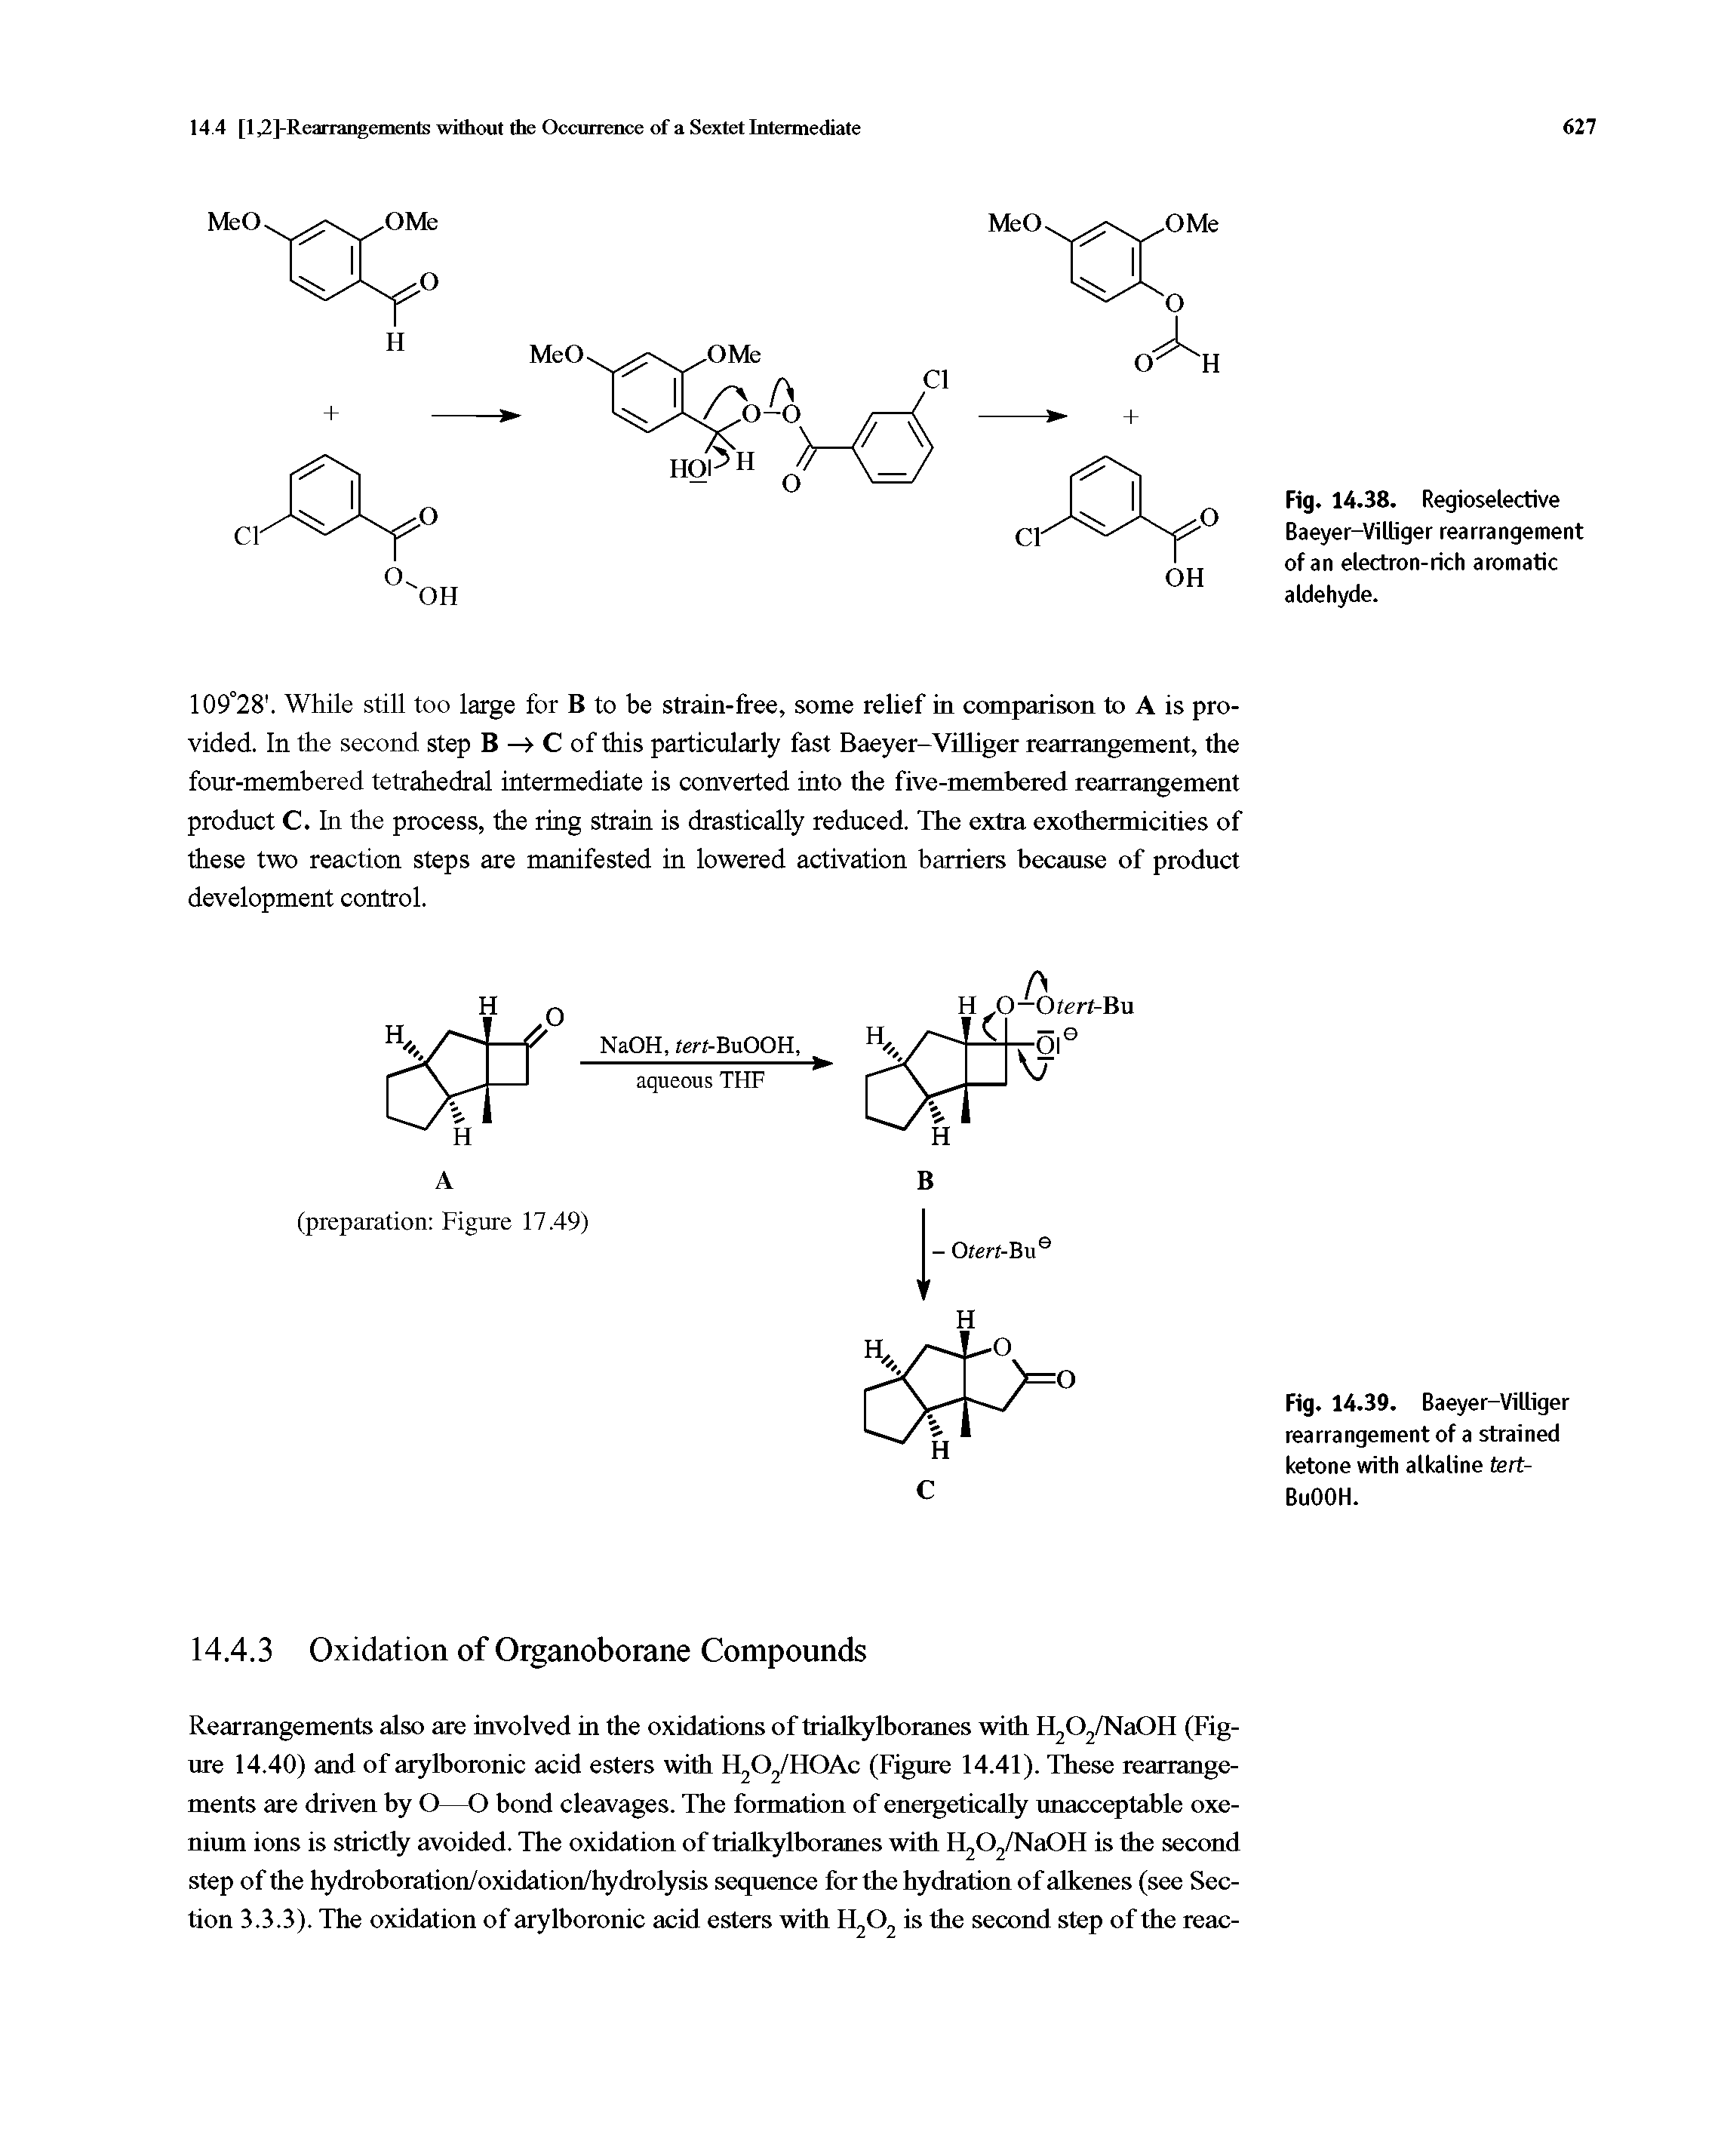 Fig. 14.39. Baeyer-Villiger rearrangement of a strained ketone with alkaline tert-BuOOH.